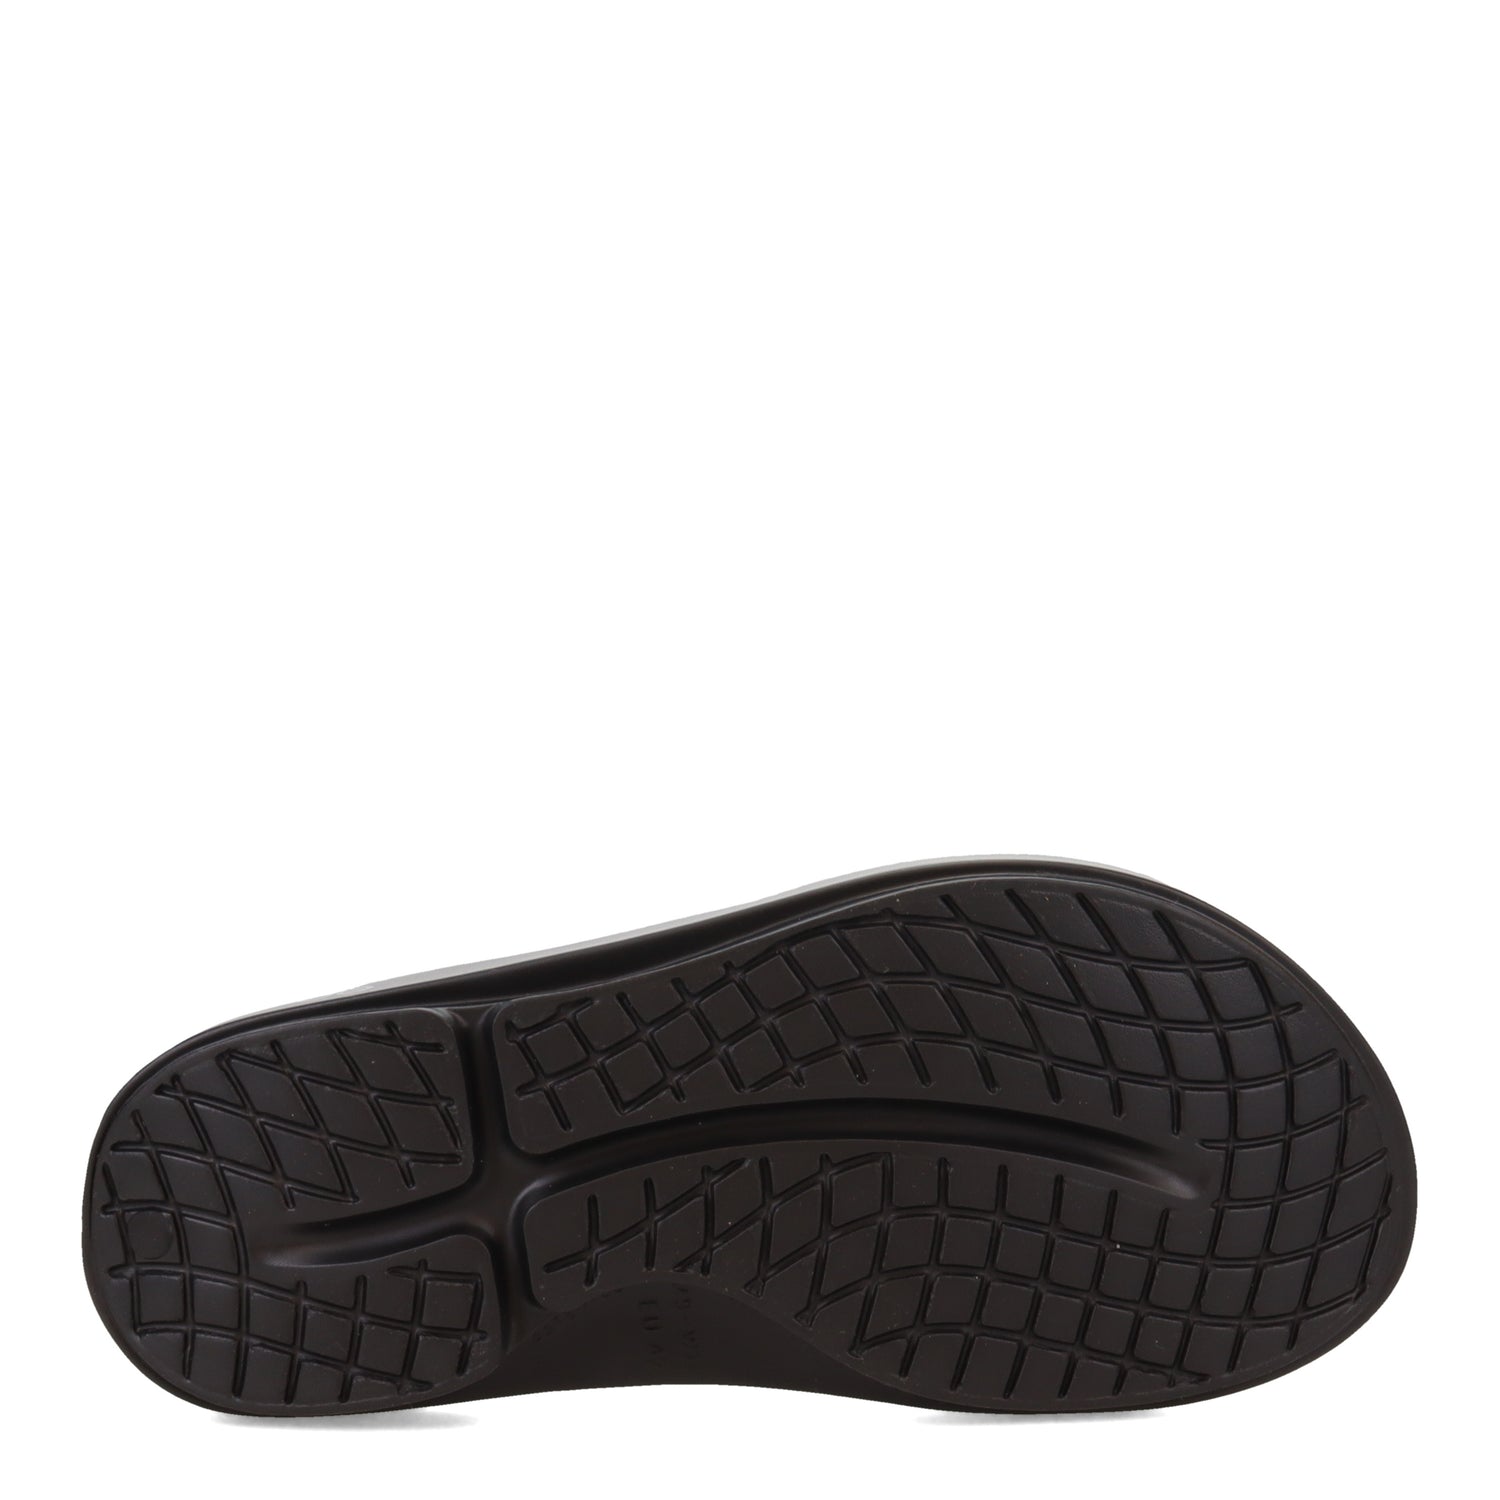 Peltz Shoes  Unisex Oofos OOriginal Sandal BLACK CAMO 1001-BLACKCAMO